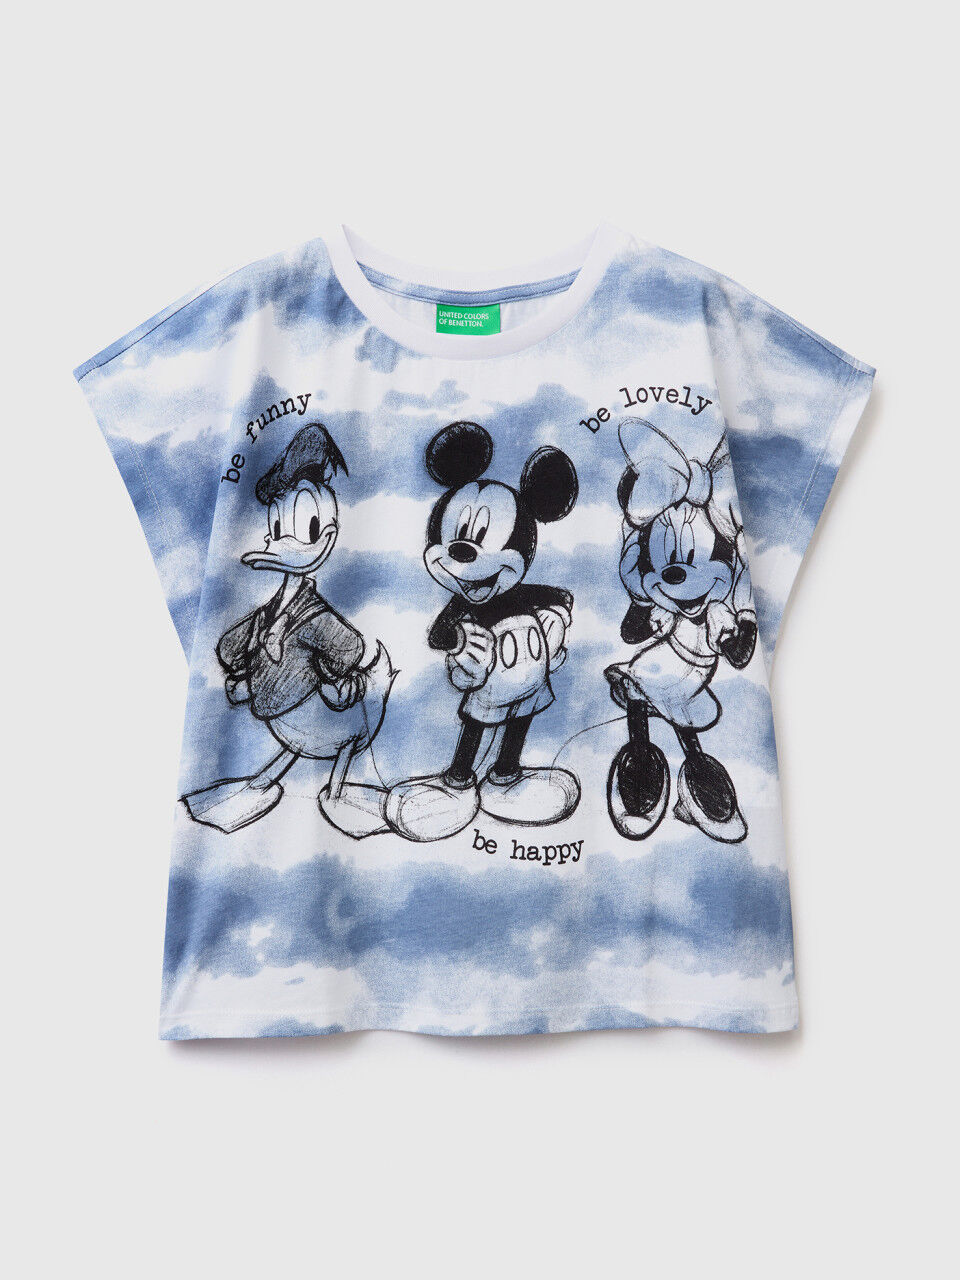 Tie-dye t-shirt with Disney print